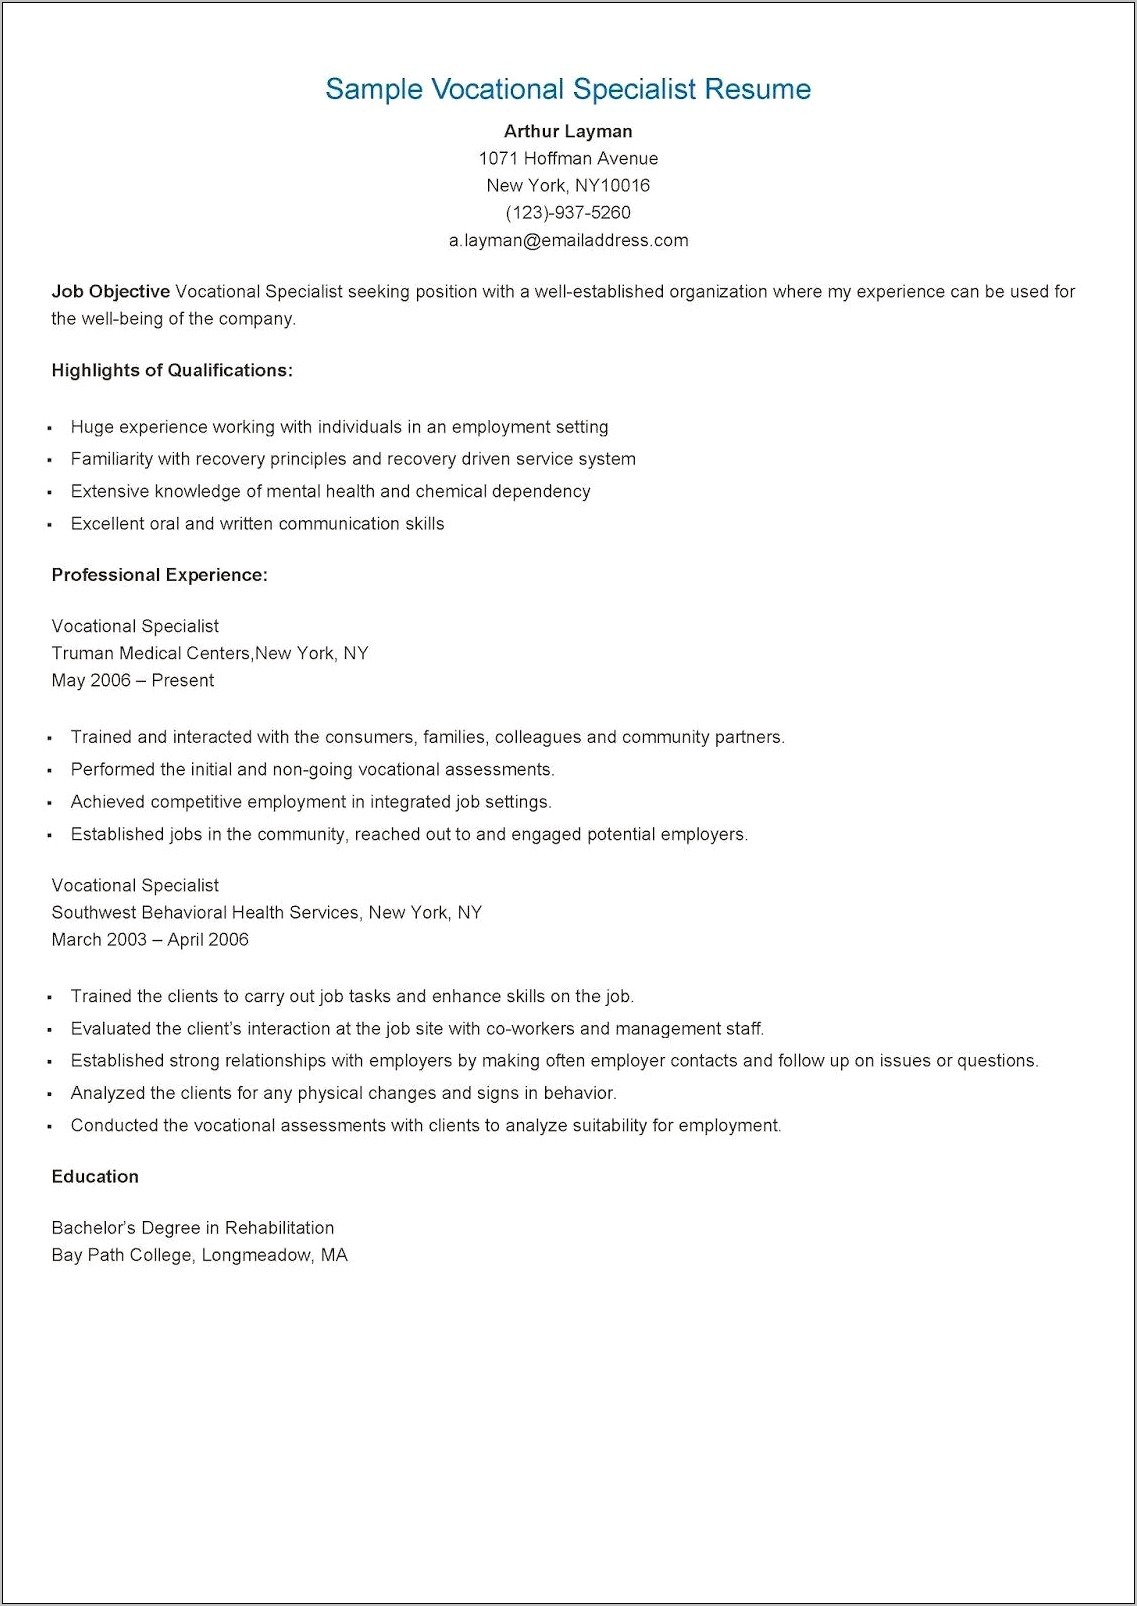 Sample Resume For Behavioral Specialist